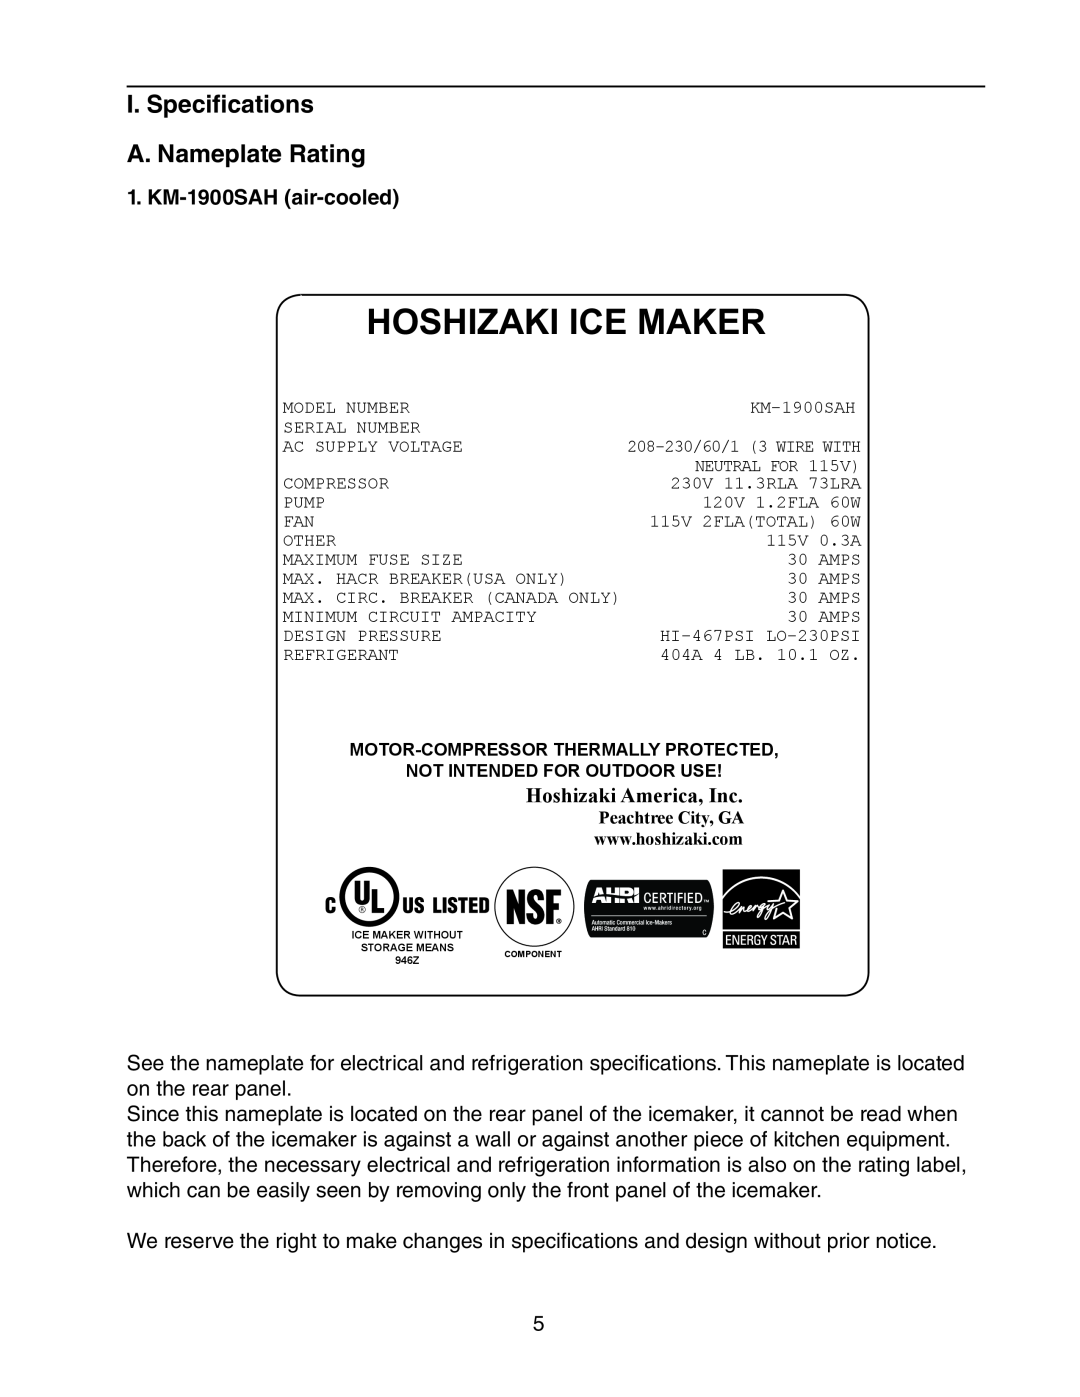 Hoshizaki KM-1900SWH/3, KM-1900SRH/3 Hoshizaki Ice Maker, I. Specifications A. Nameplate Rating, KM-1900SAH air-cooled 